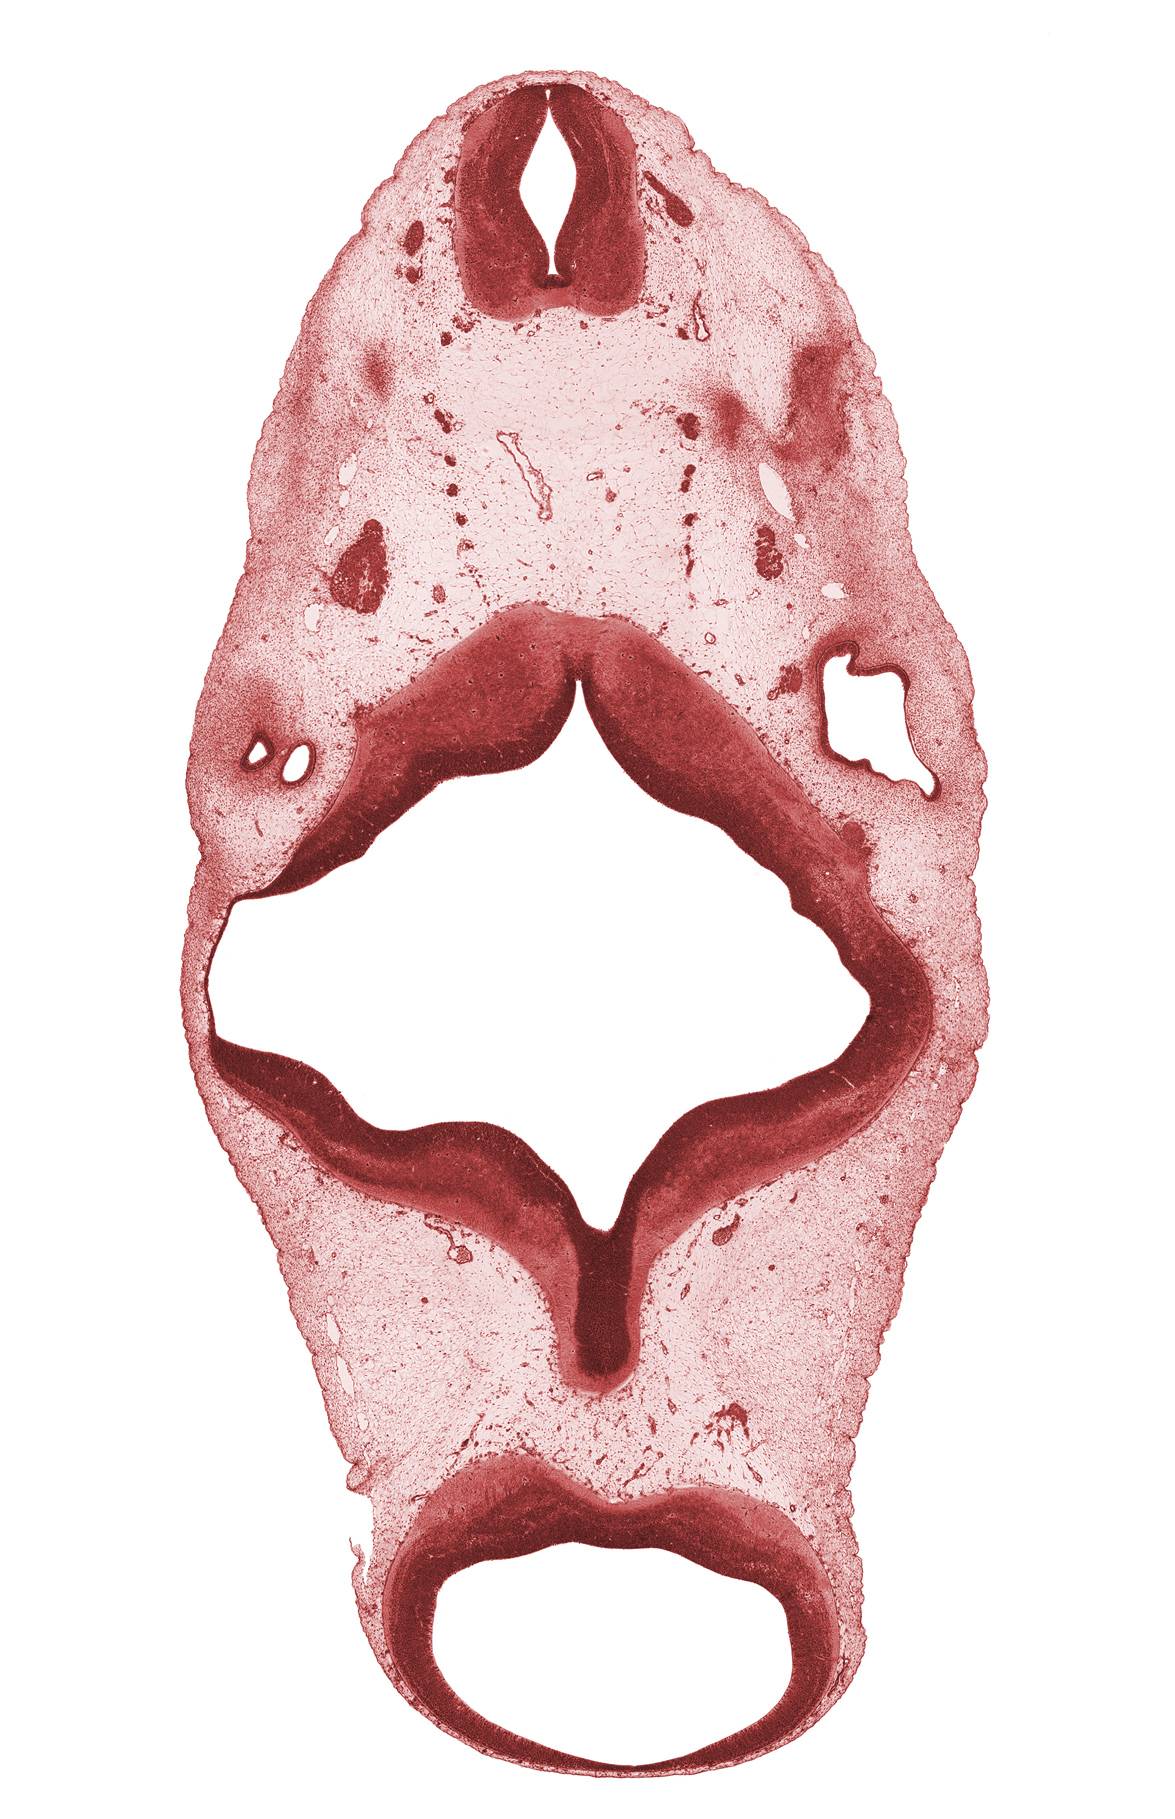 C-1 spinal ganglion, anterior semicircular duct, central canal, oculomotor nerve (CN III), region of mesencephalic (cephalic) flexure, rhombomere 2, rhombomere 4, spinal accessory nerve (CN XI), vagus nerve (CN X), vertebral artery